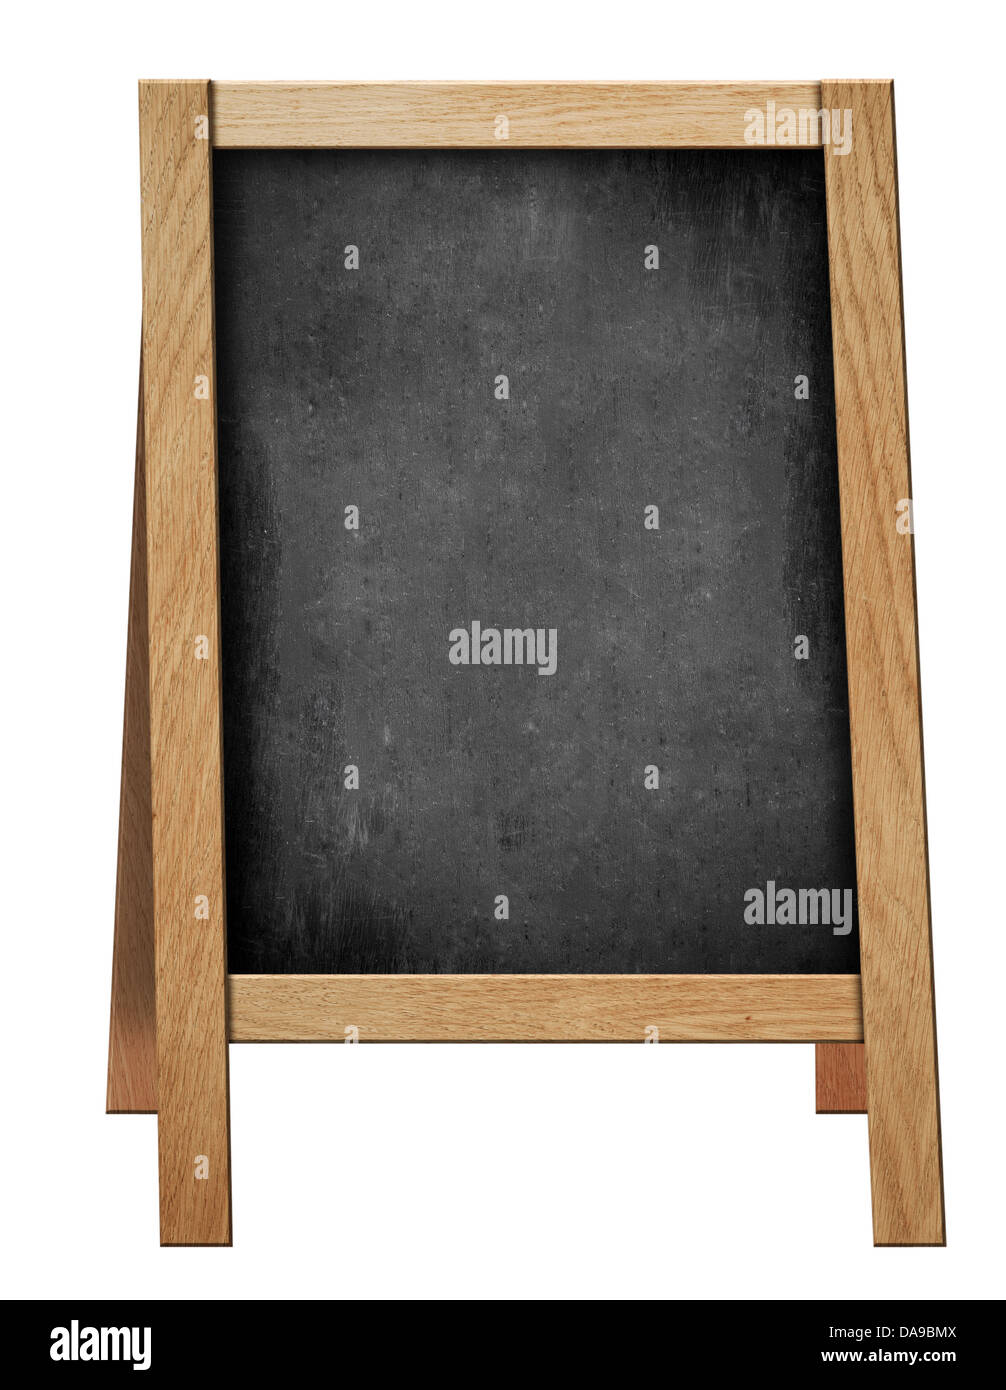 standing welcome blackboard or chalkboard Stock Photo